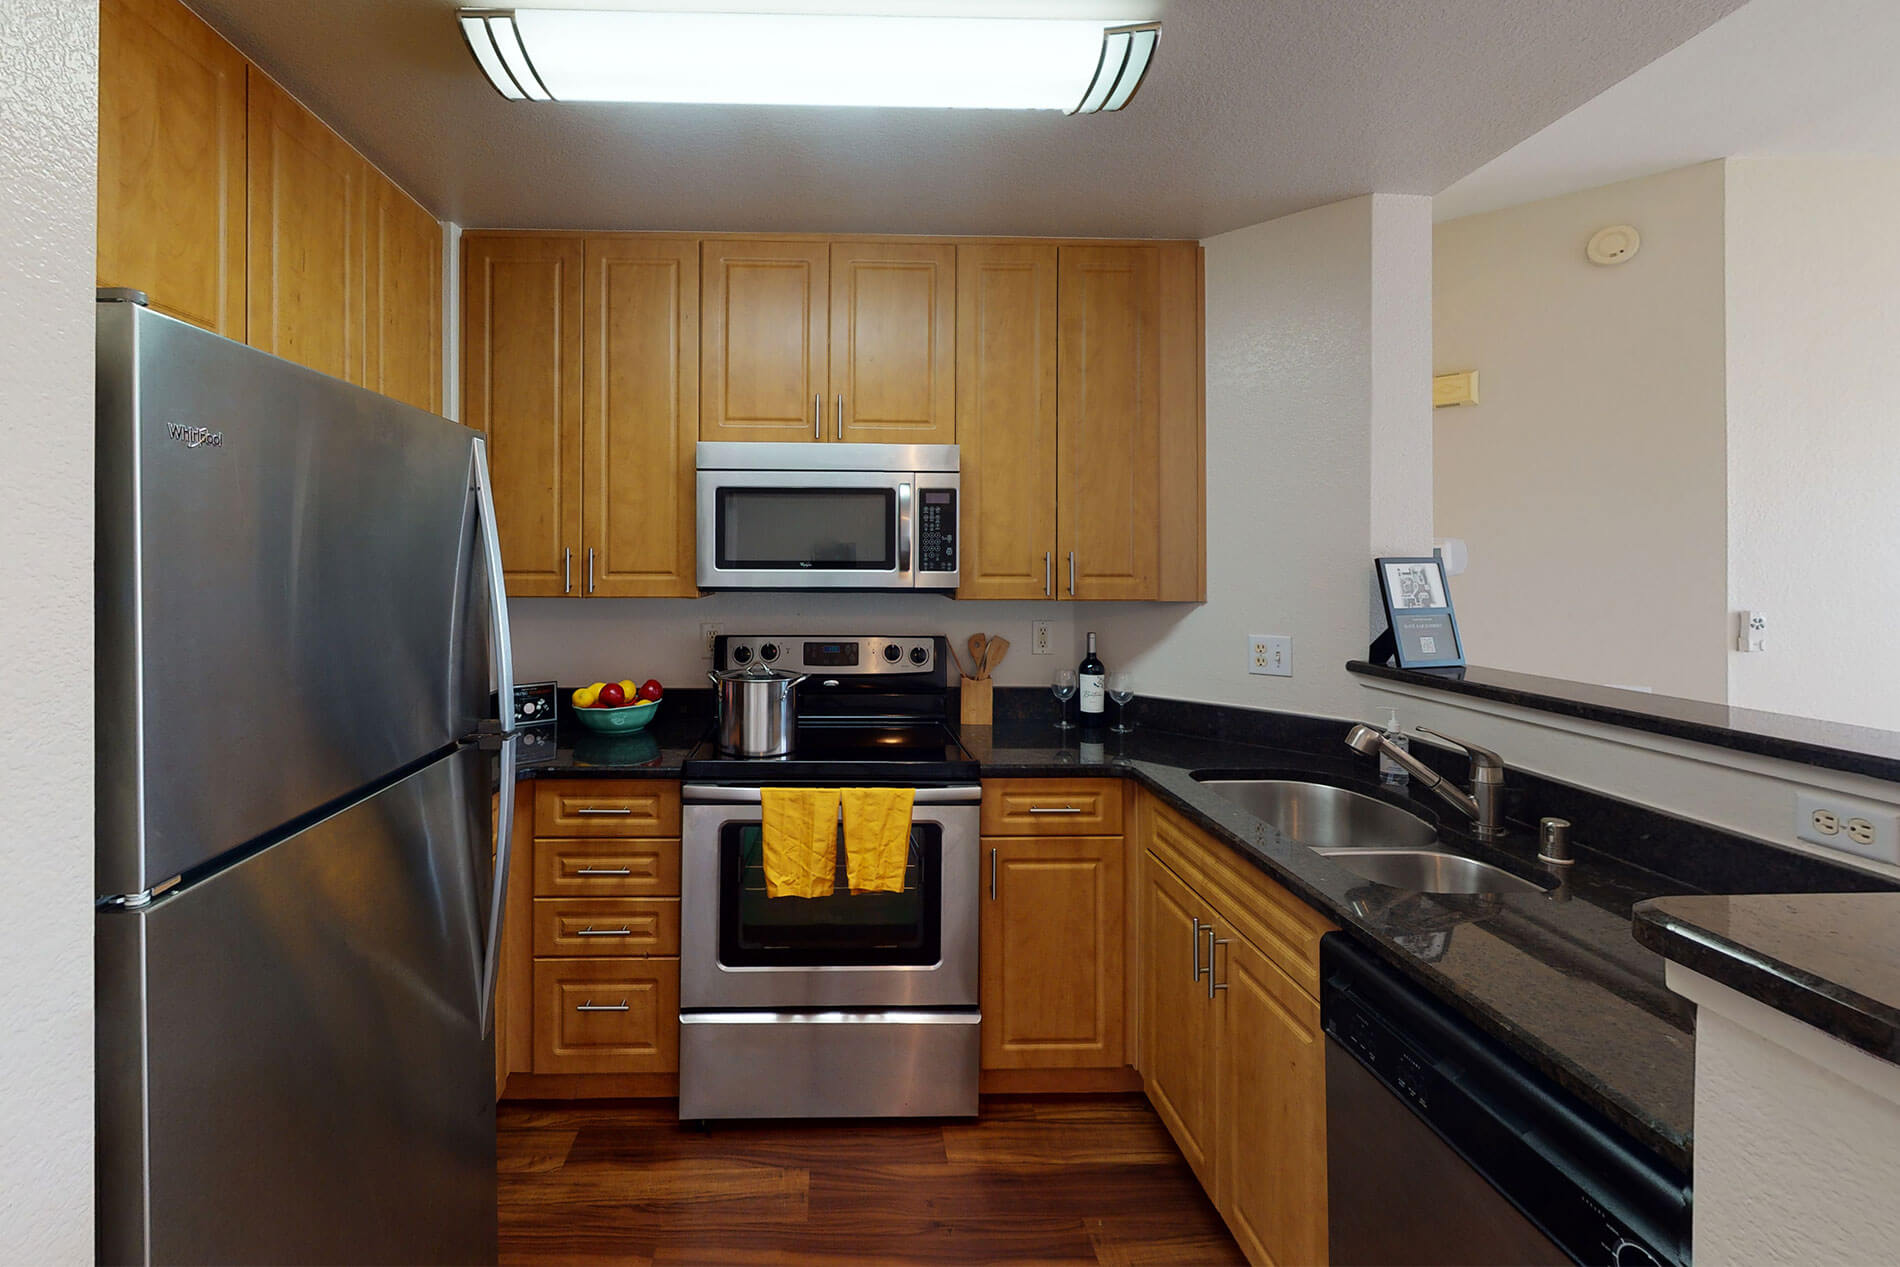 Almaden Lake Village apartment kitchen